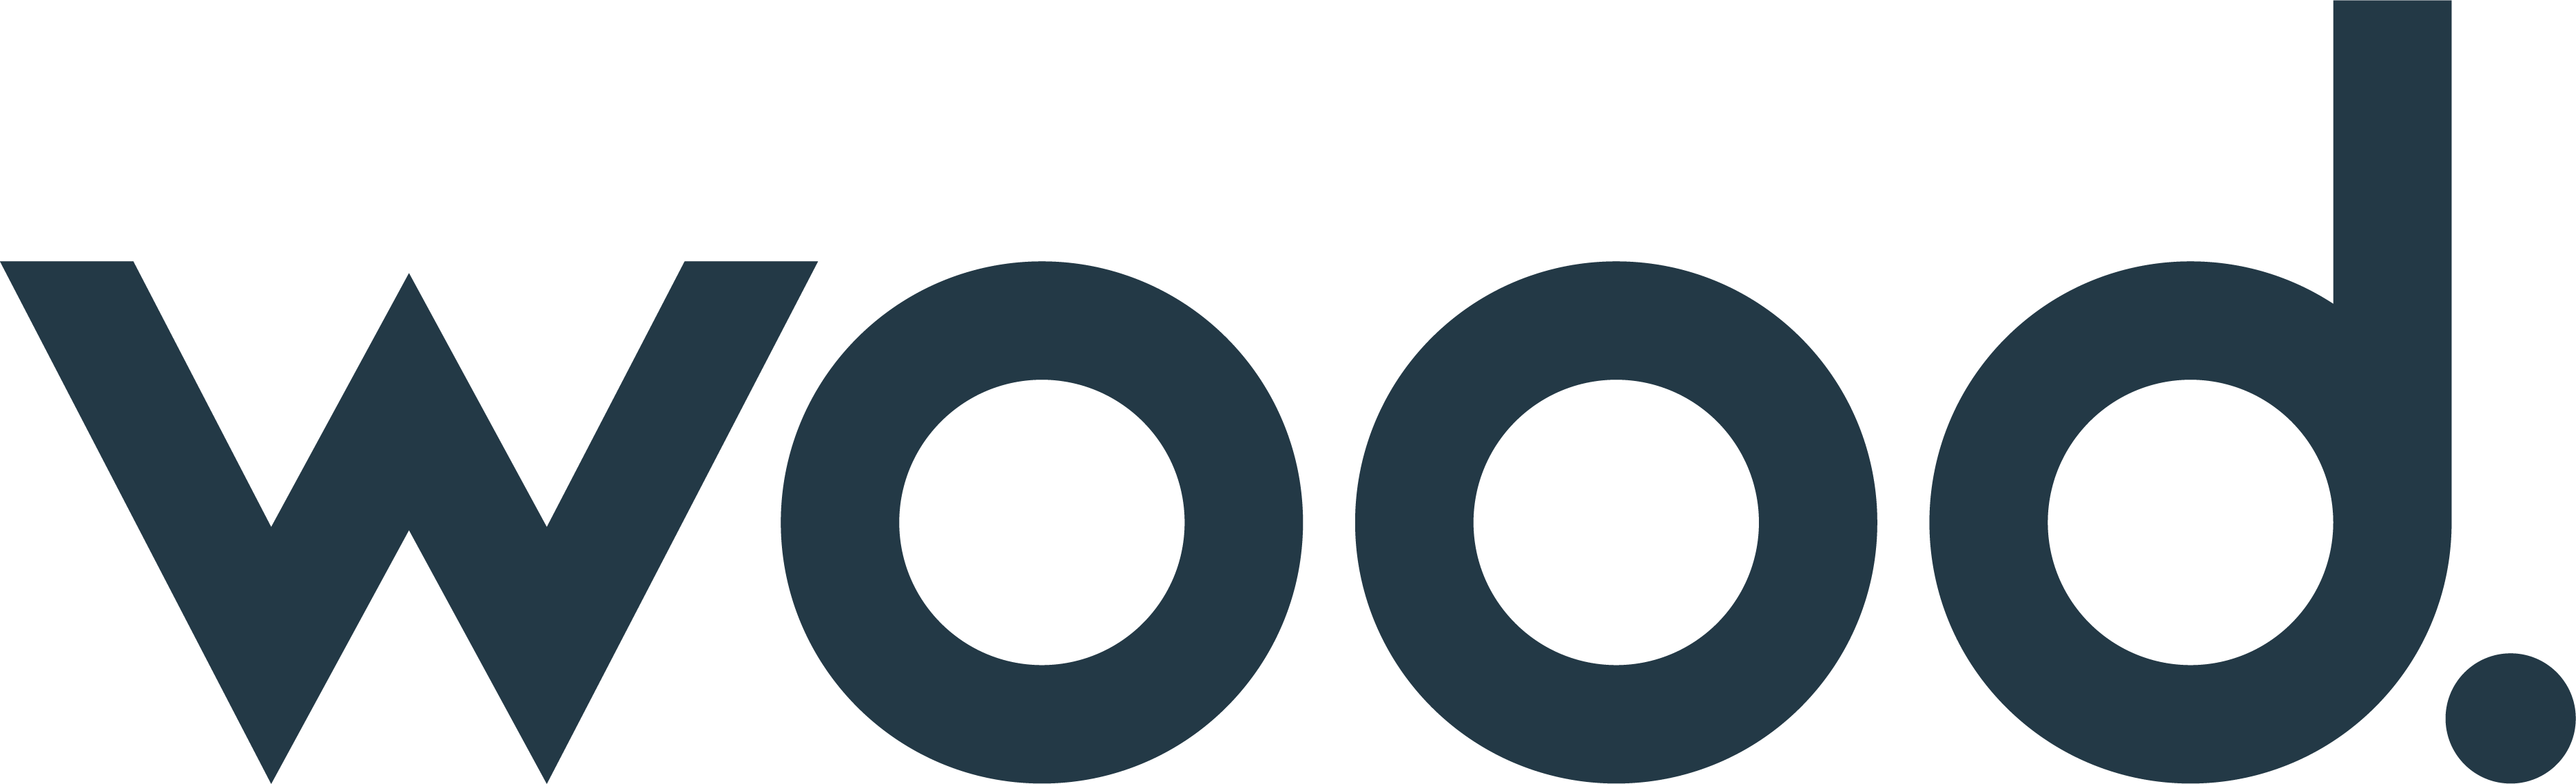 logo for Wood